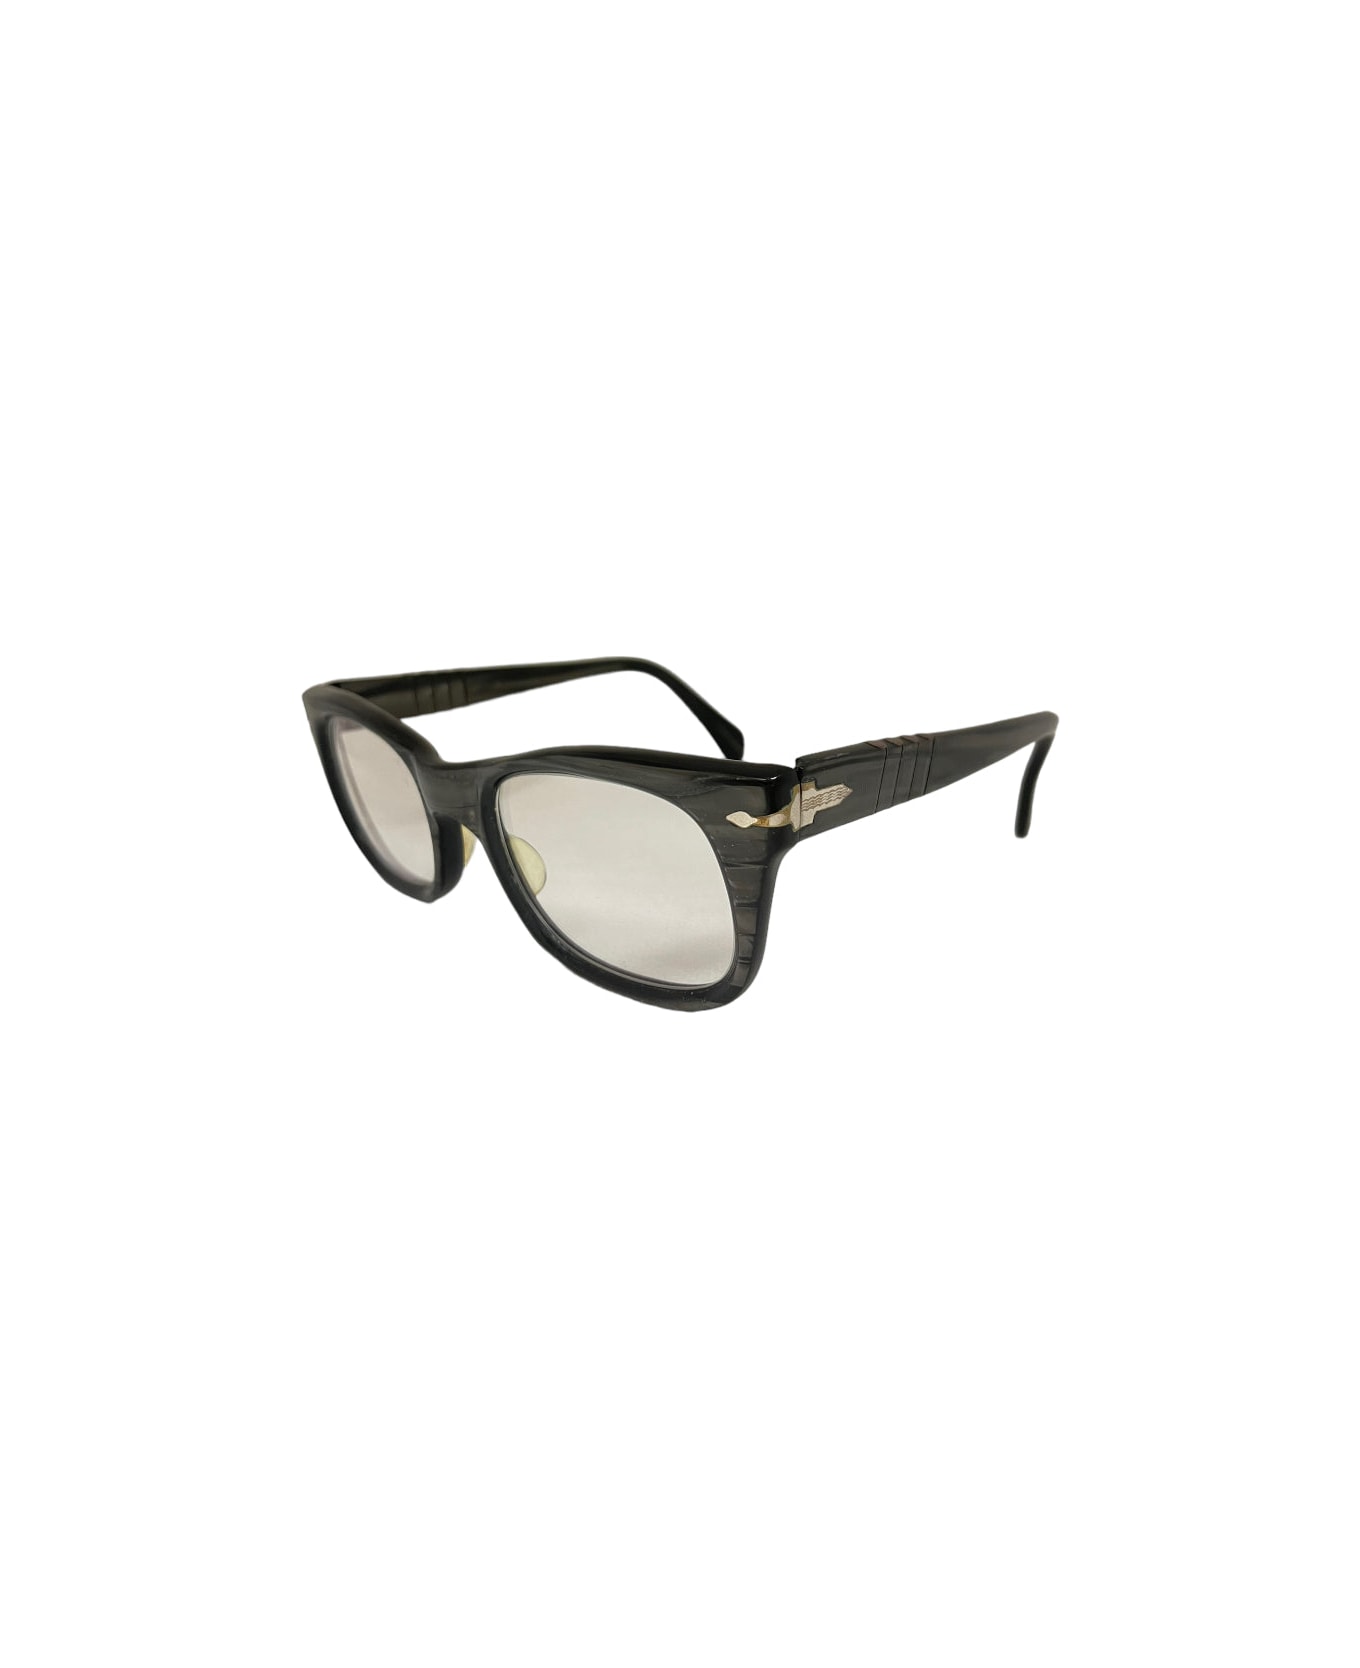 Persol Meflecto - Havana Grey Sunglasses サングラス